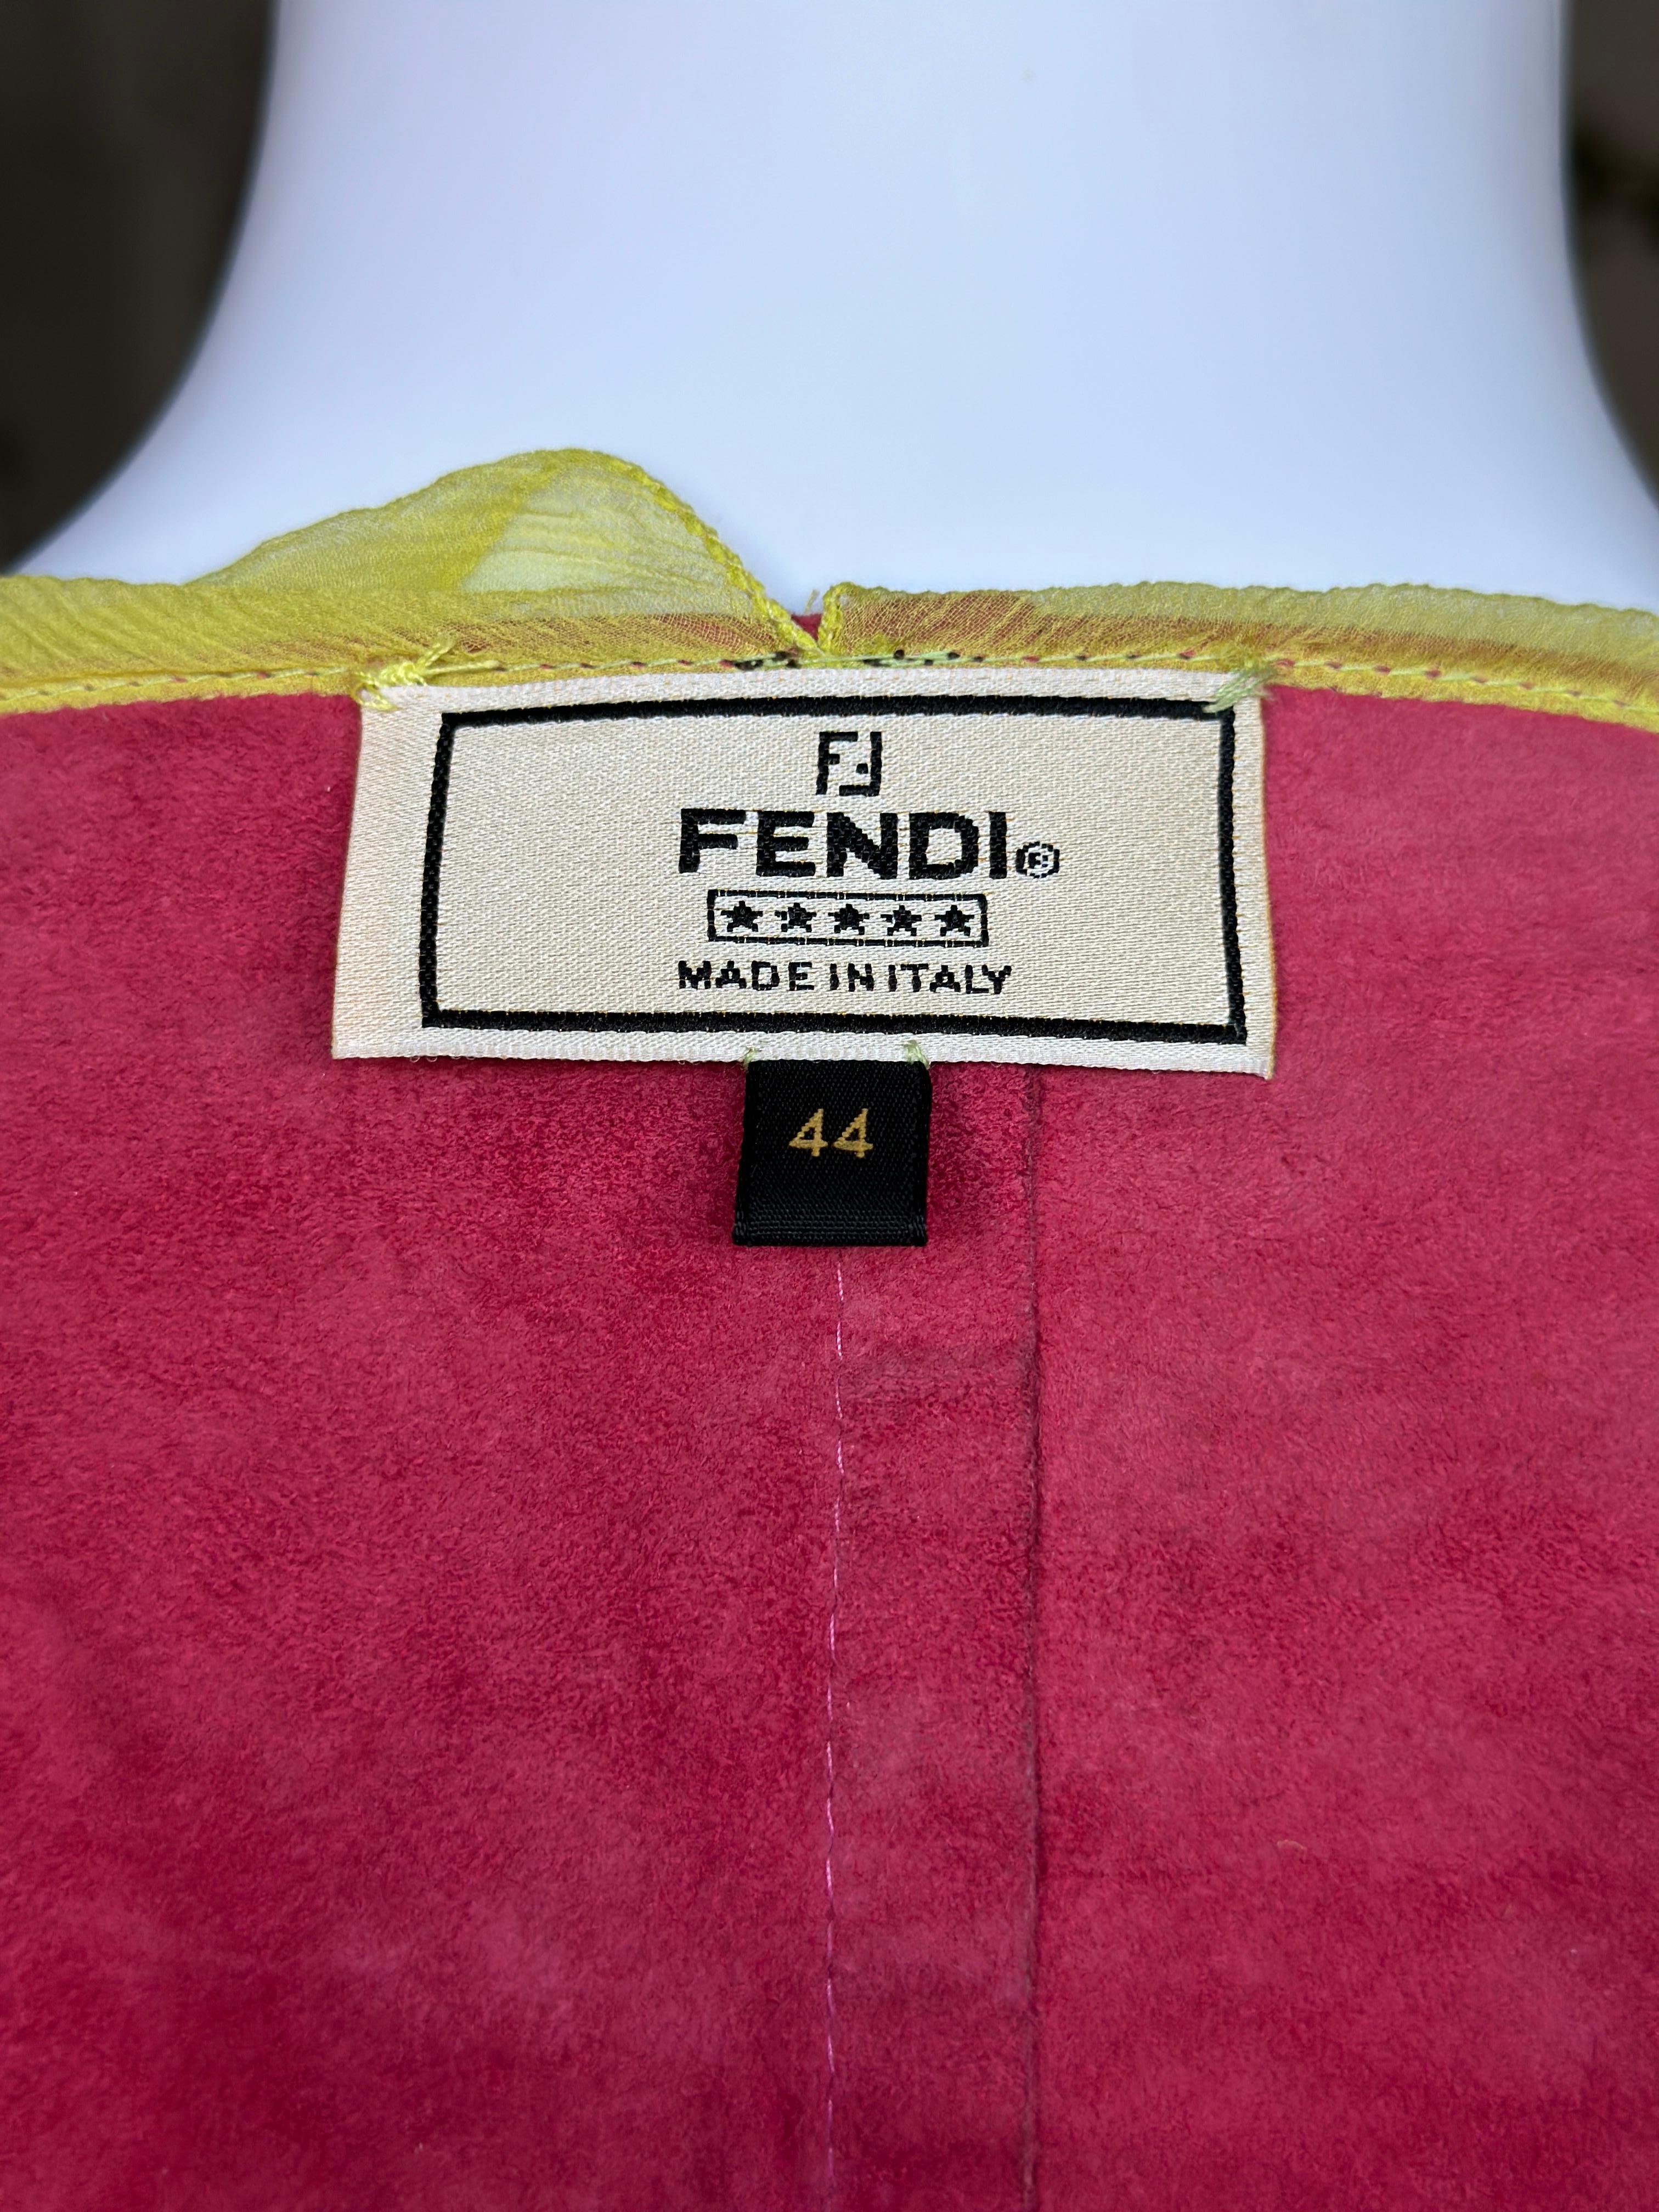 S/S 2000 Fendi by Karl Lagerfeld A Patent Leather Lime Silk Chiffon Jacket 3